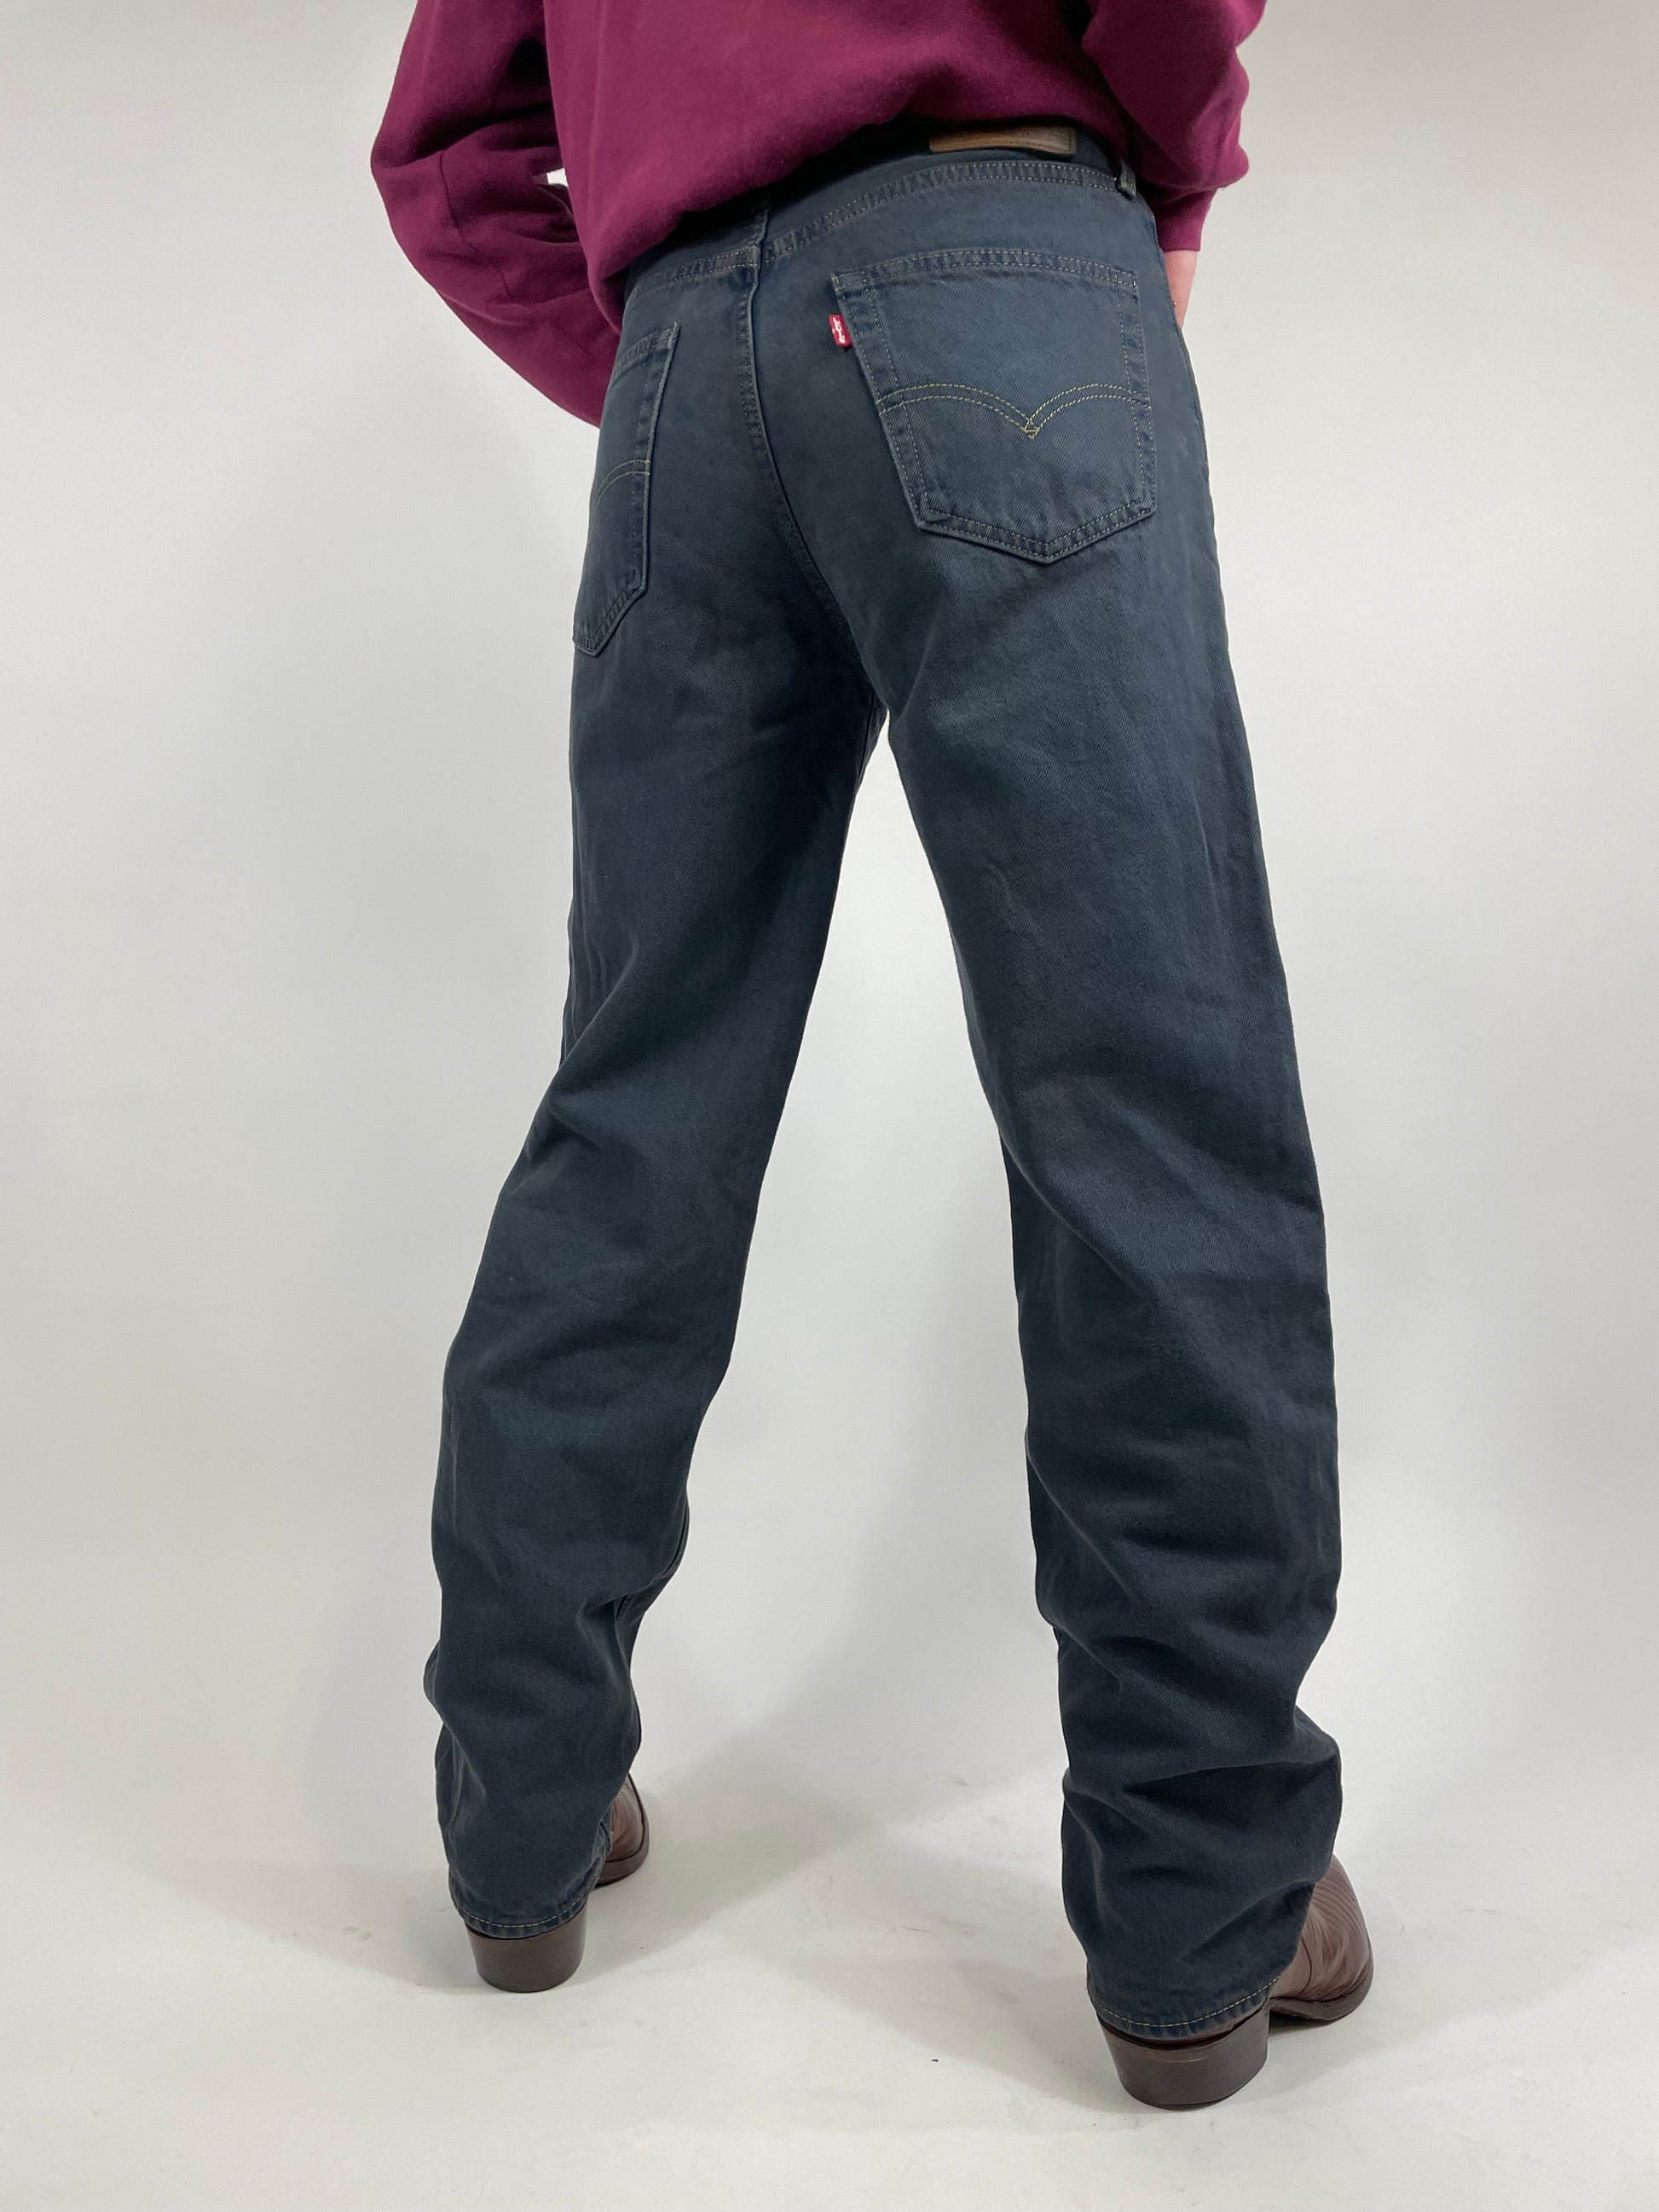 jeans-big-E-colore-lavagna